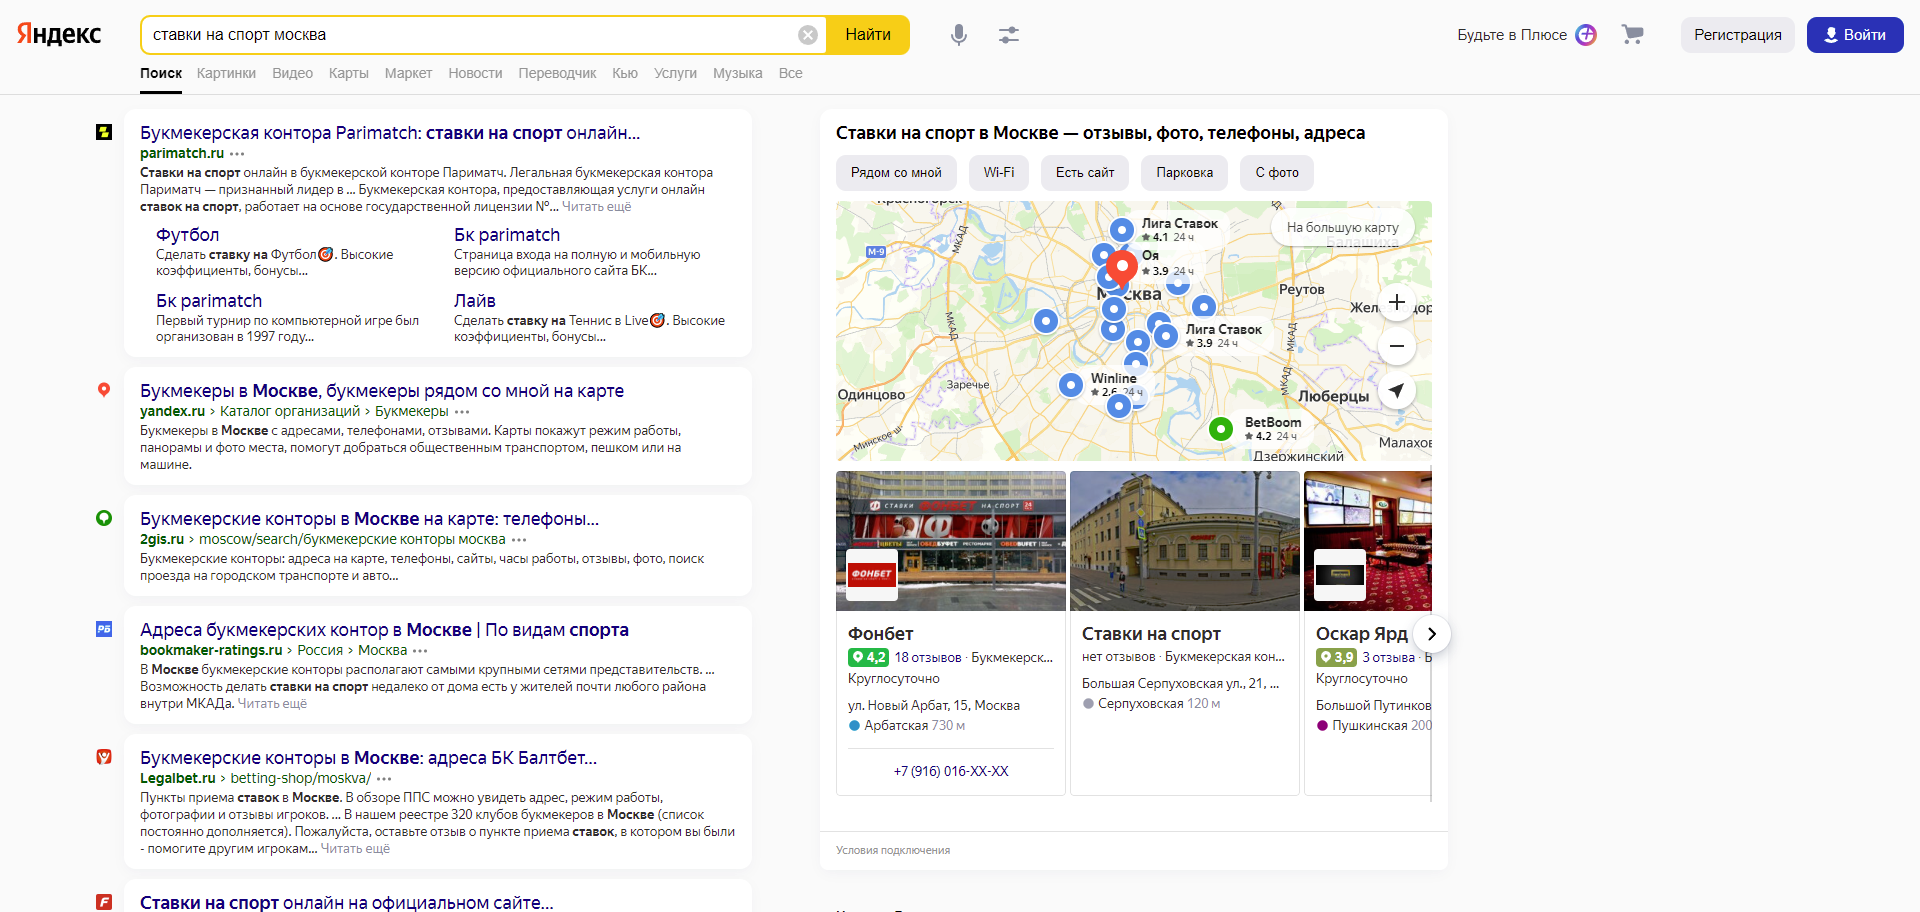 Источник трафика - Яндекс.Карты и Google Maps